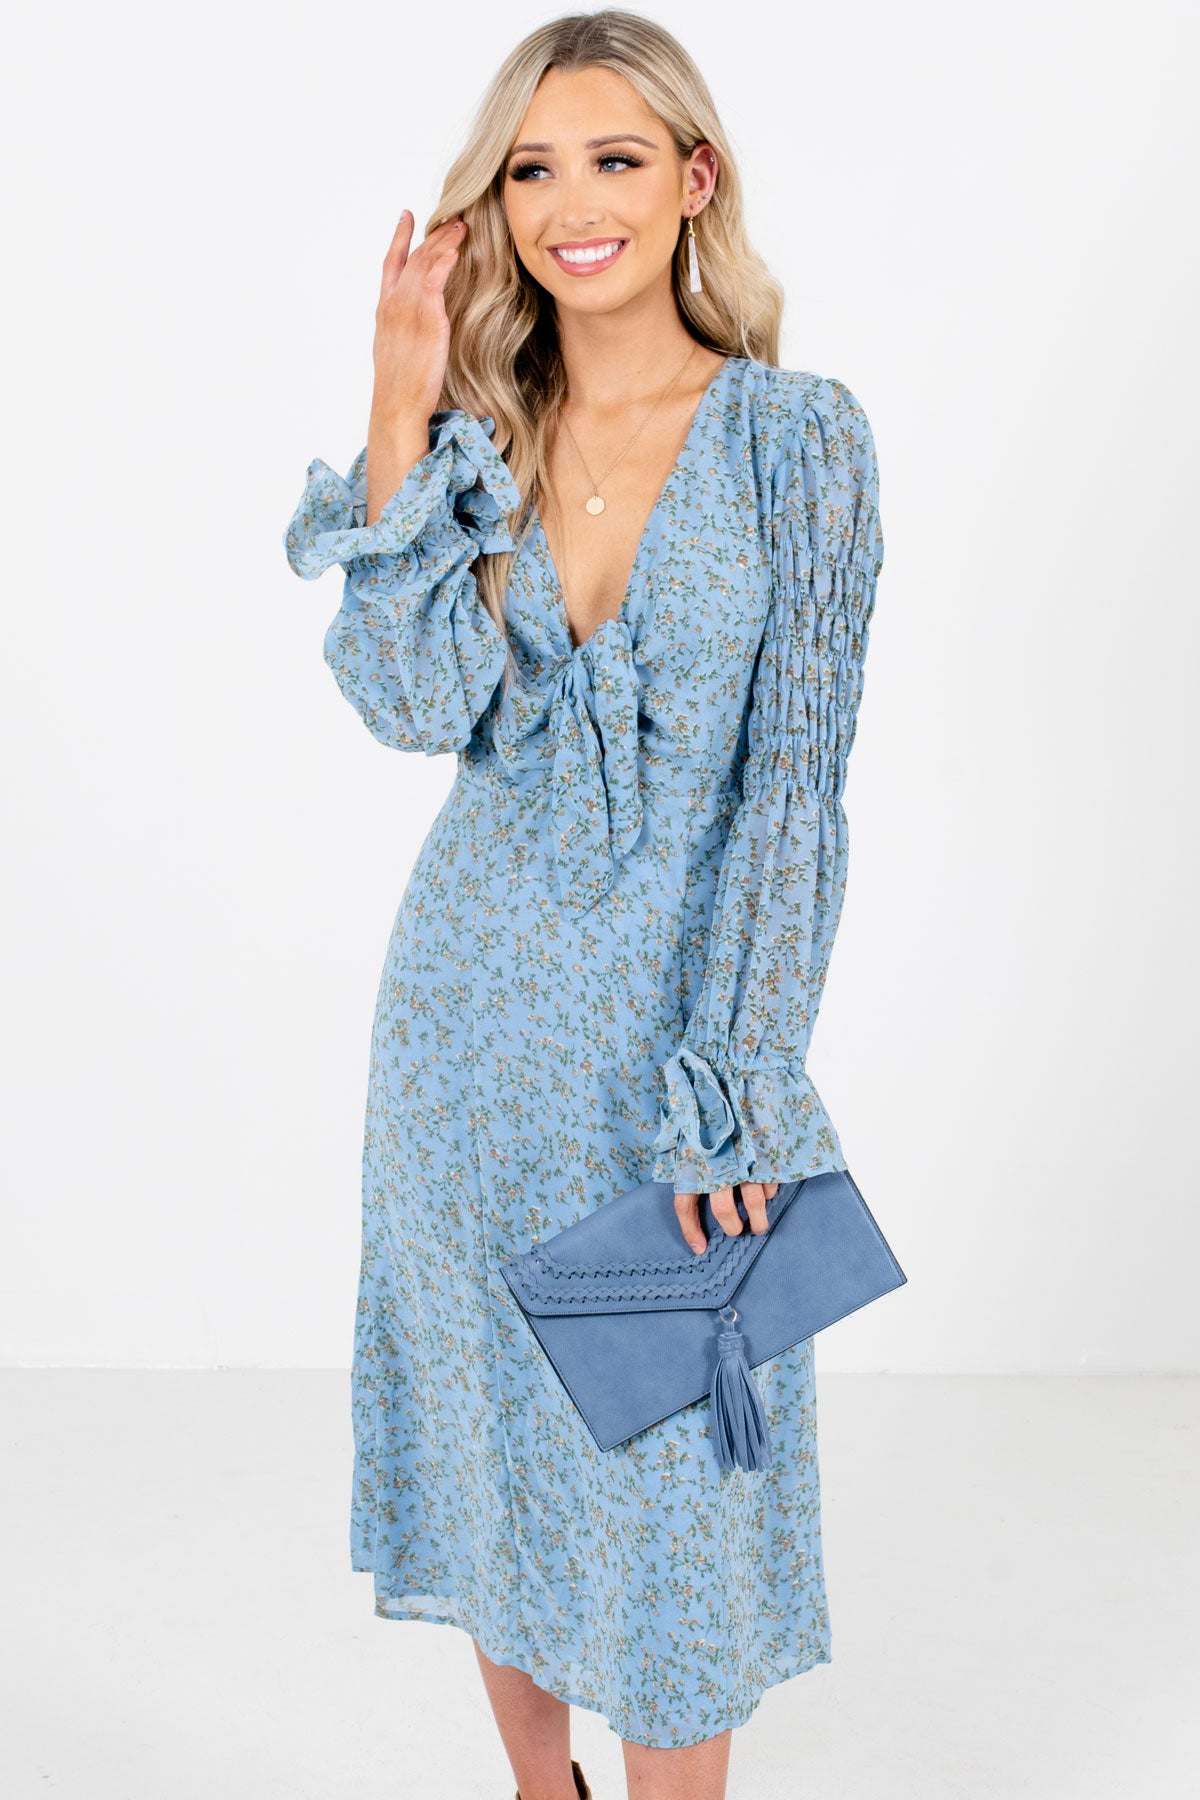 Blue Floral Patterned Boutique Midi Dresses for Women